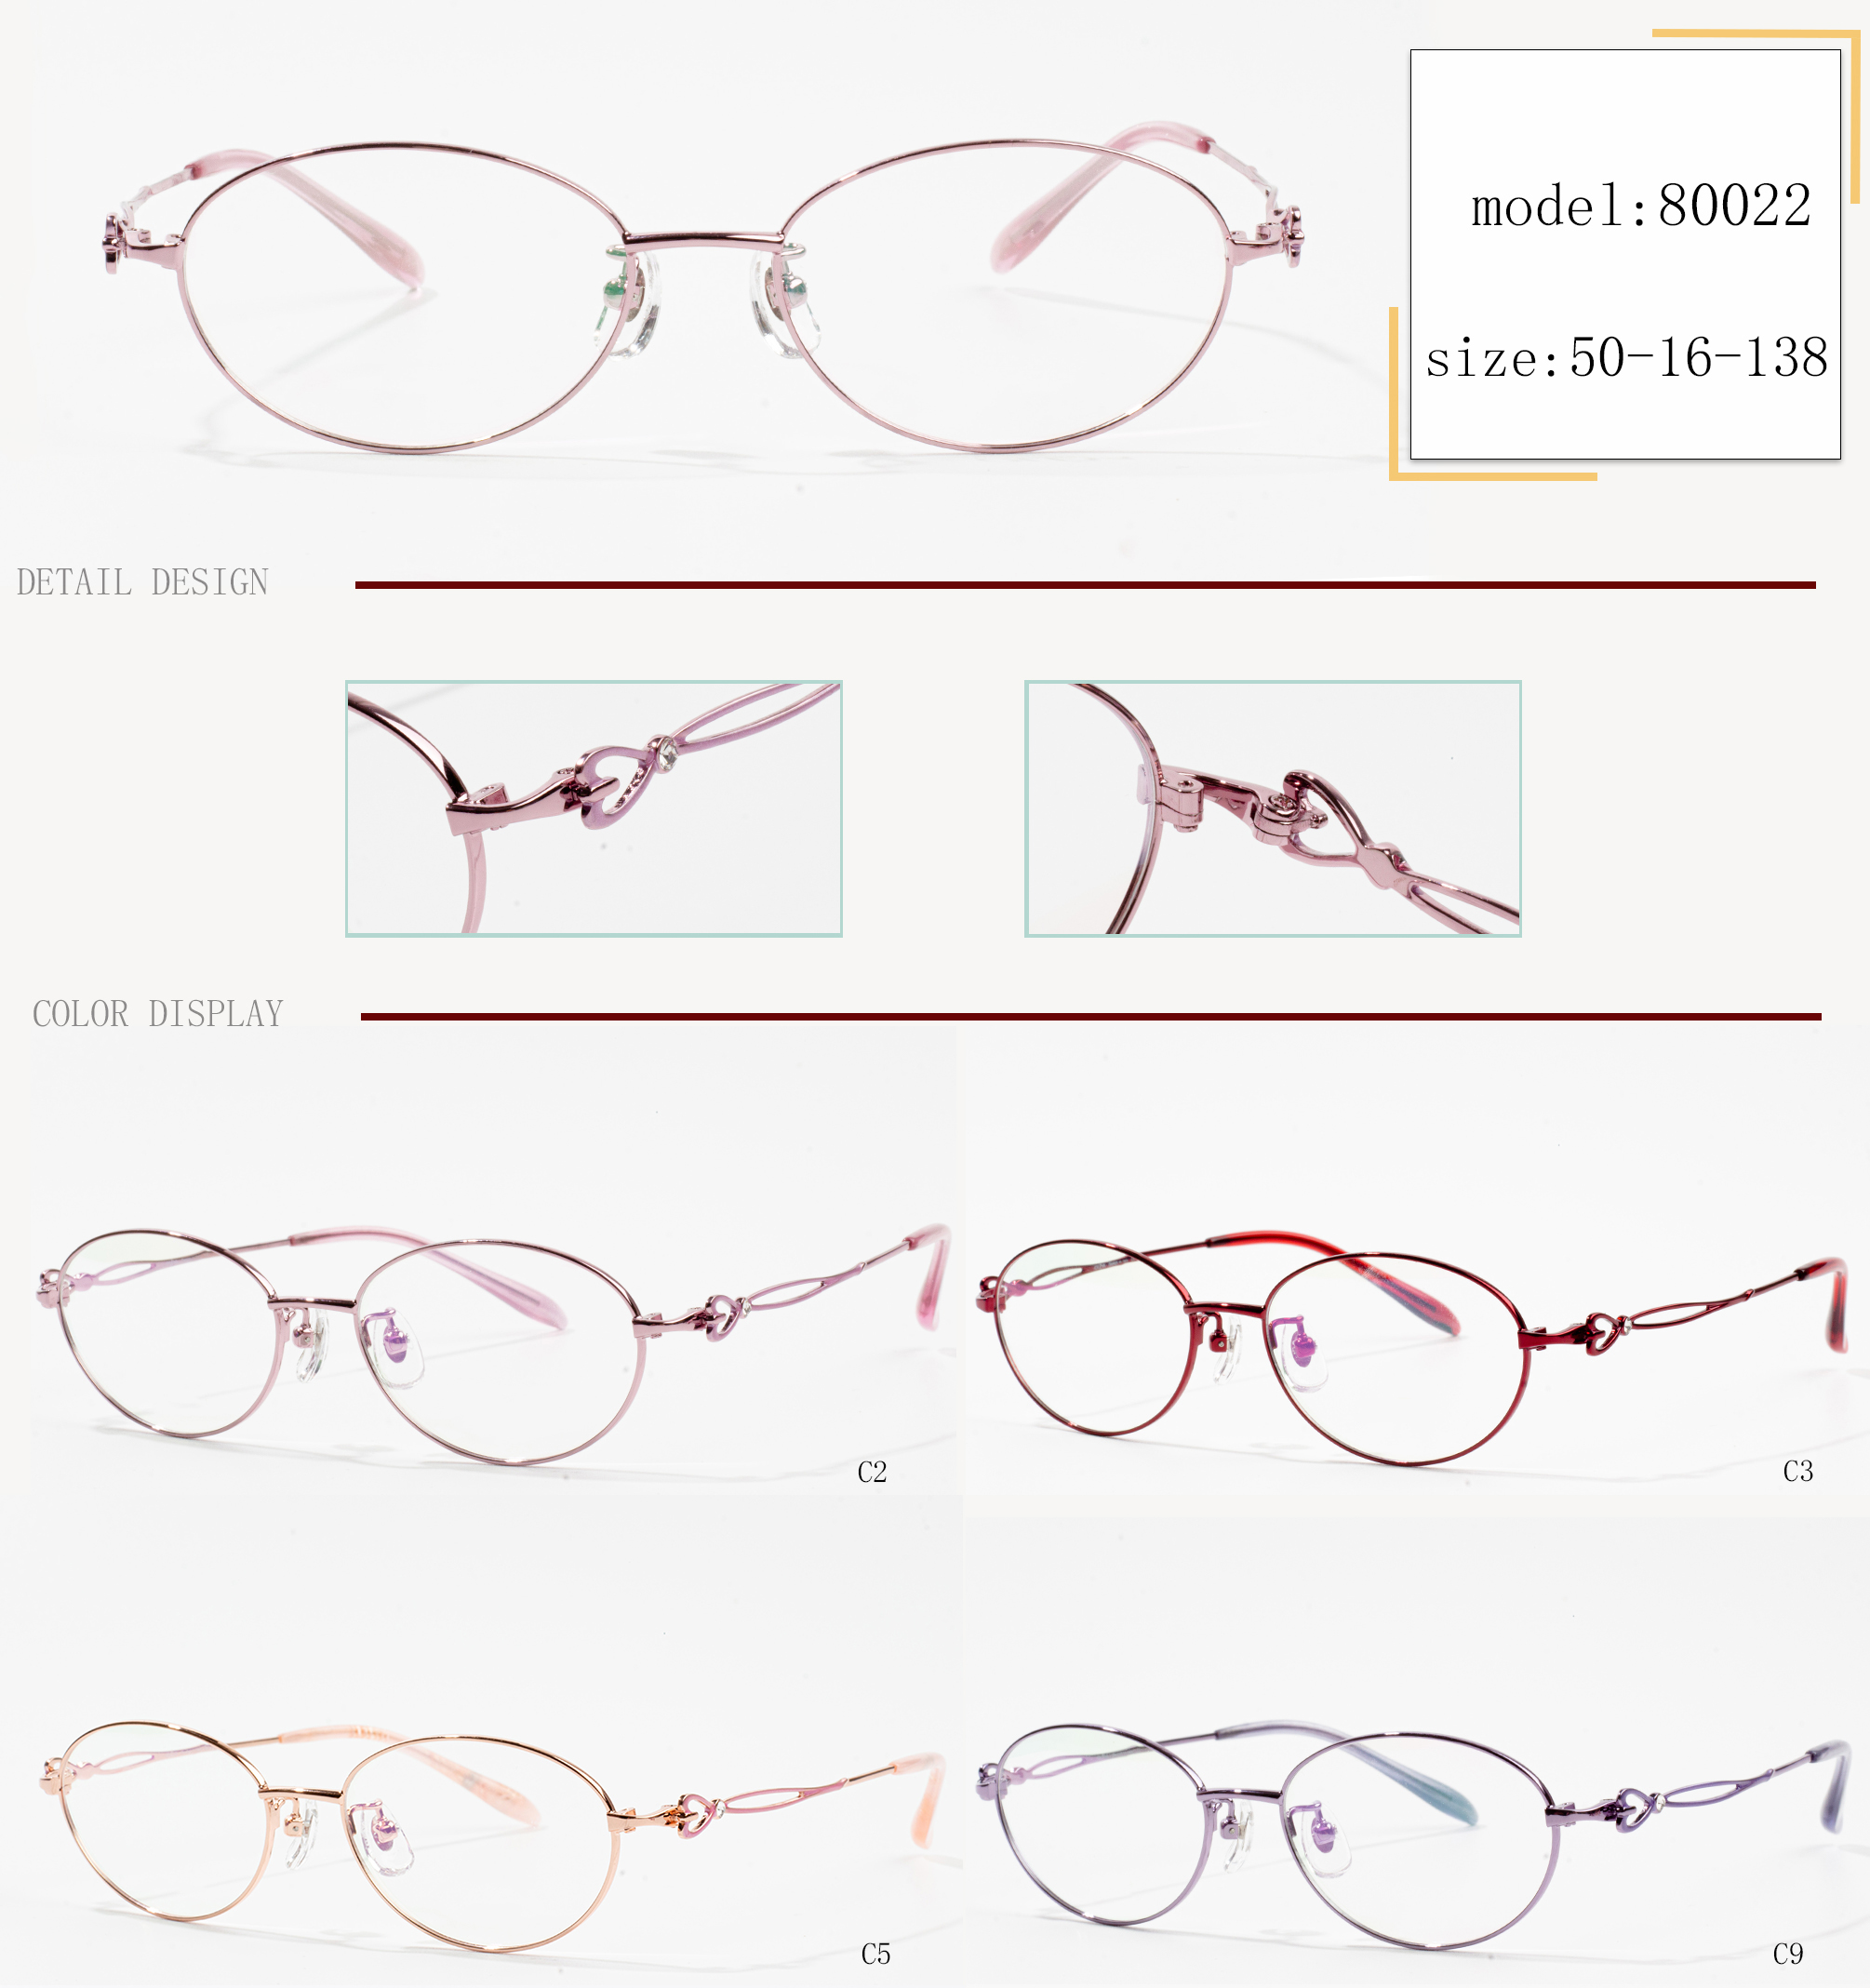 frame kacamata